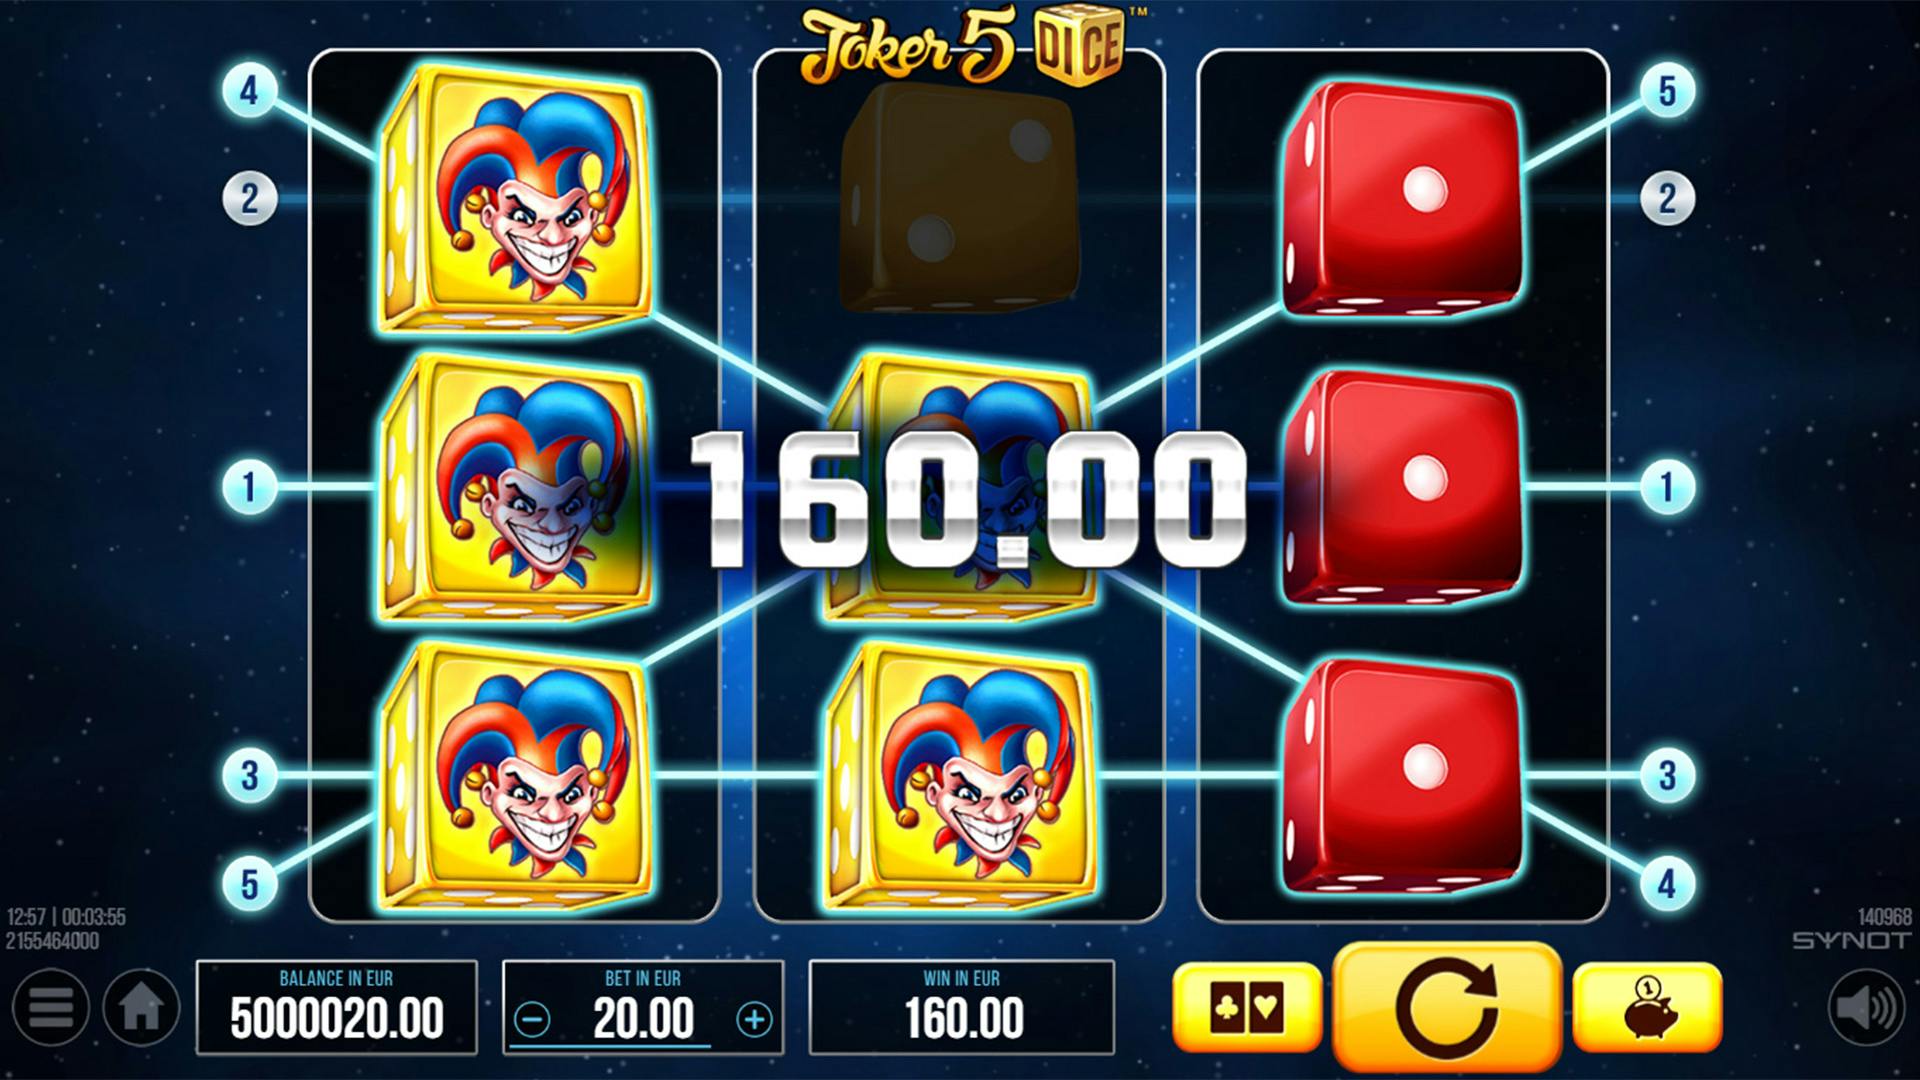 Revue de Synot Joker 5 Dice jeu de dice slot